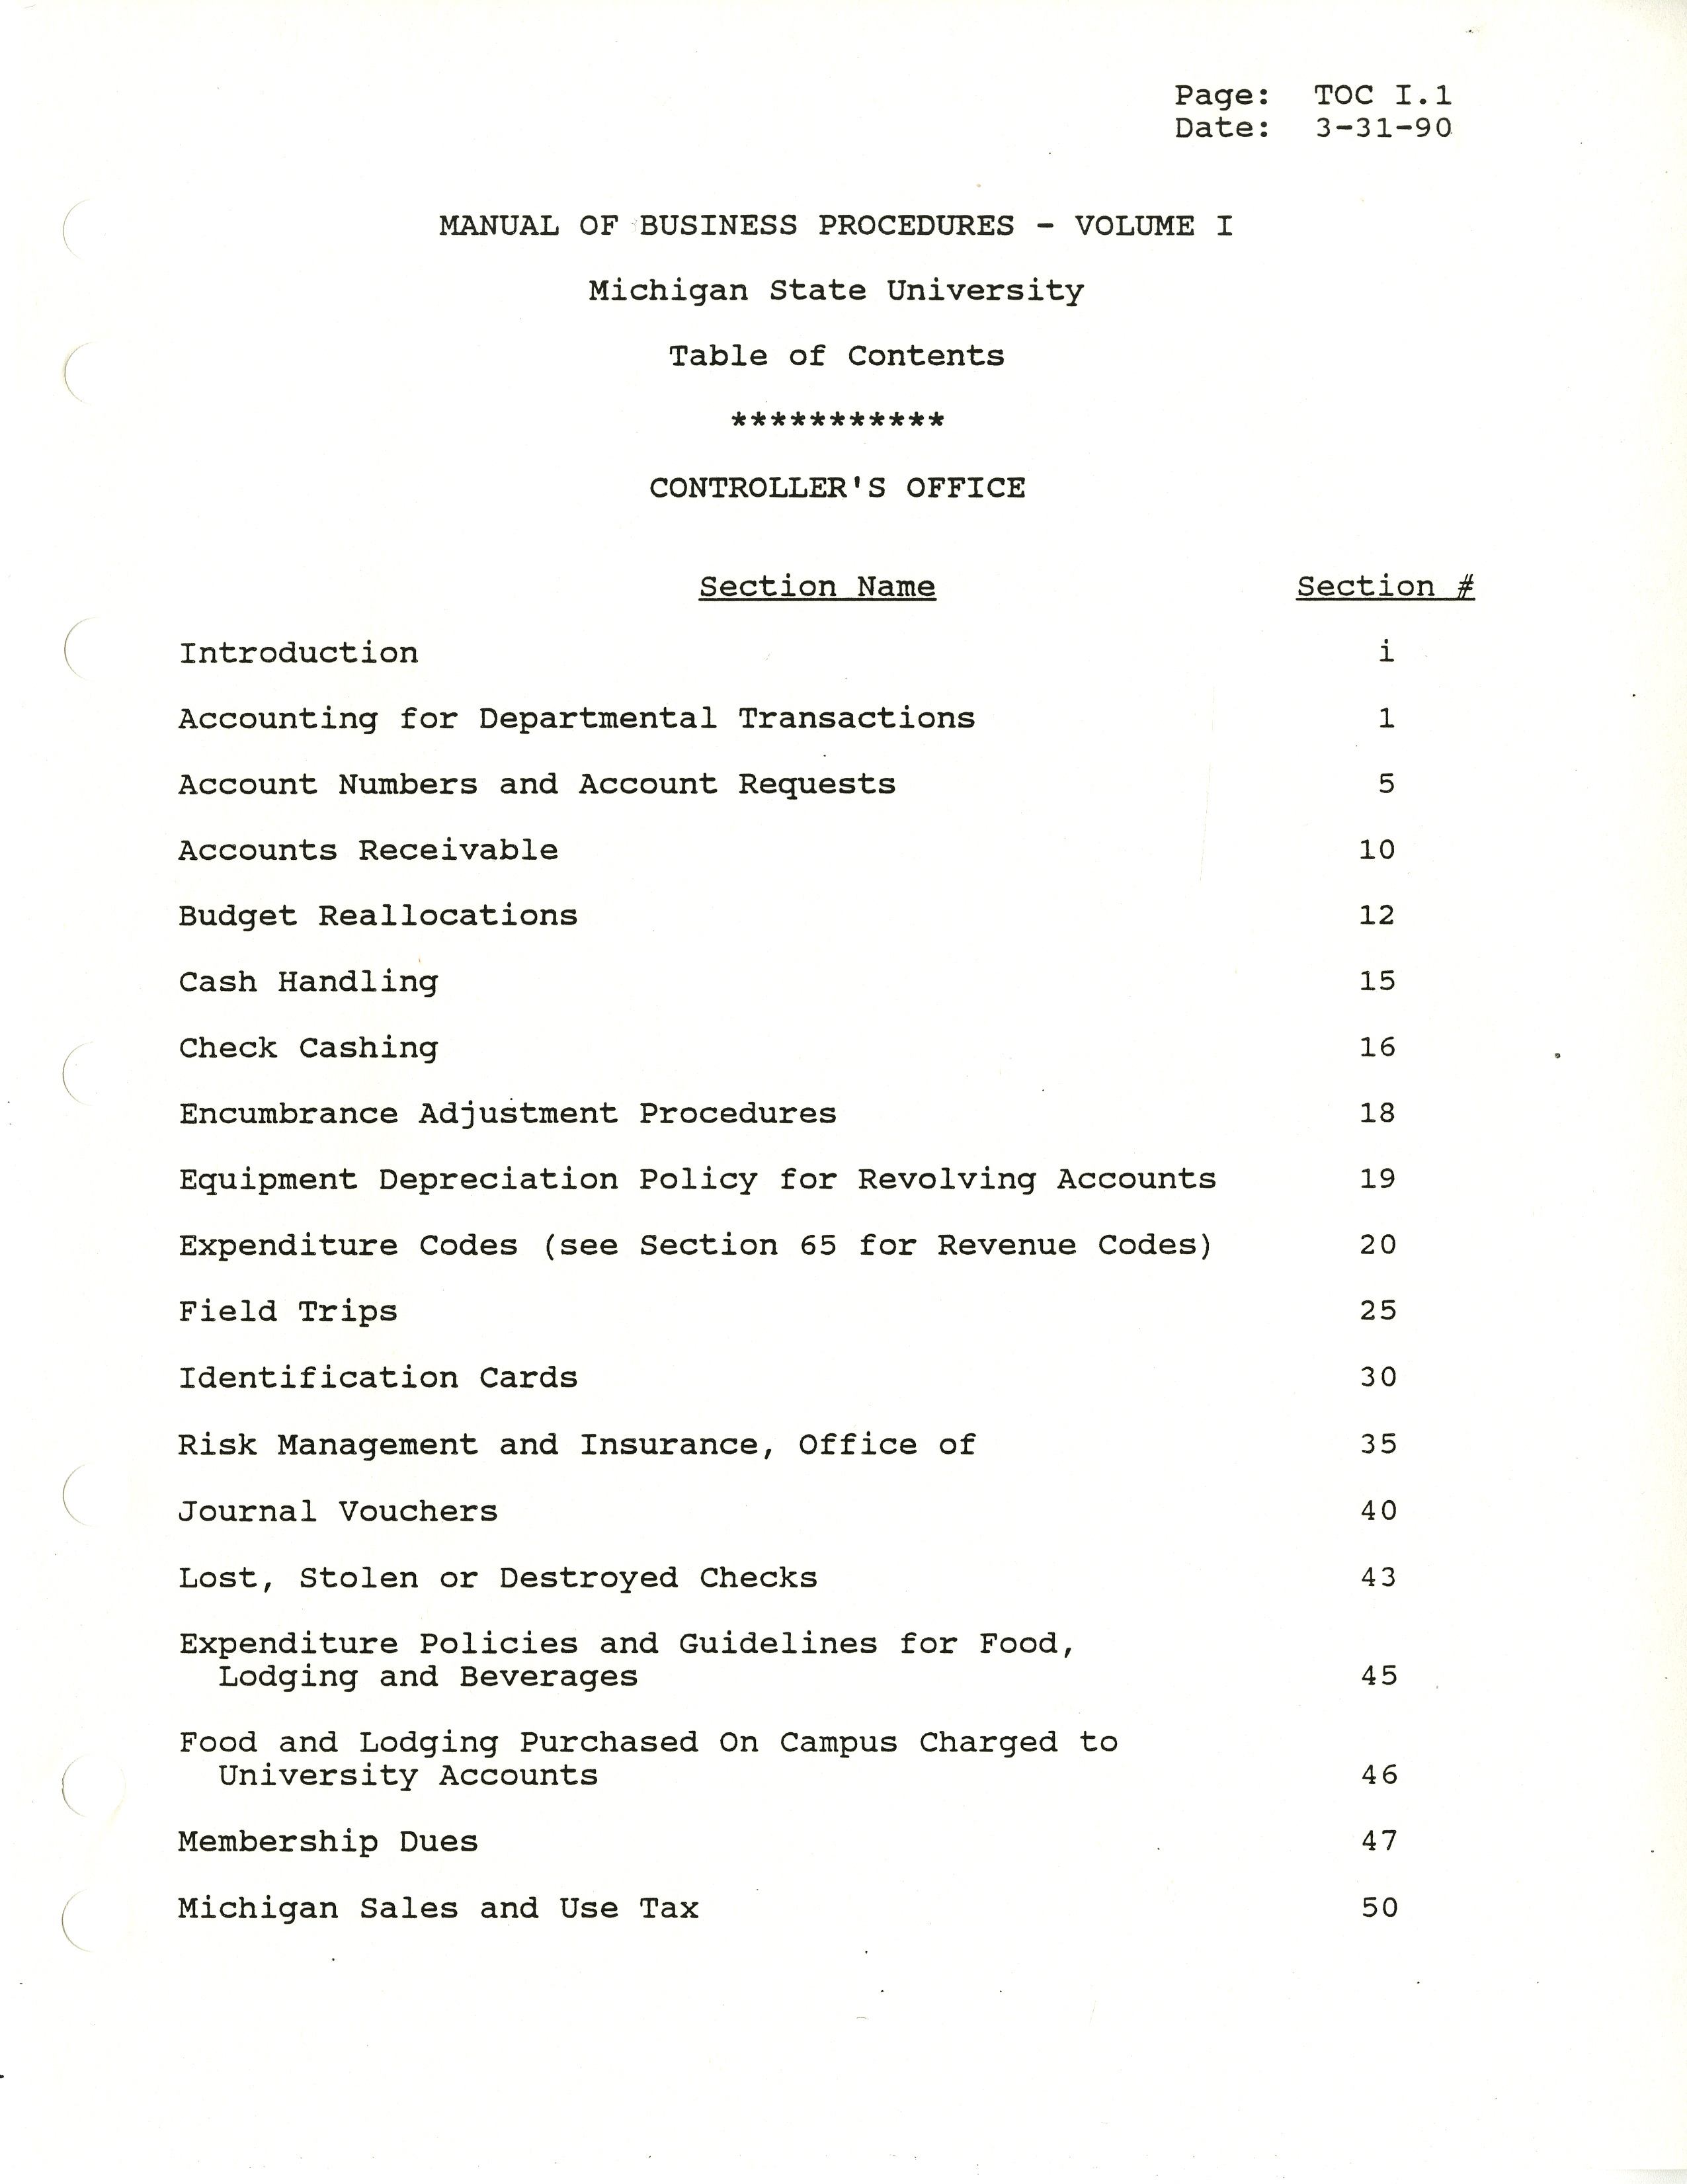 MSU Manual of Business Procedures, 1990